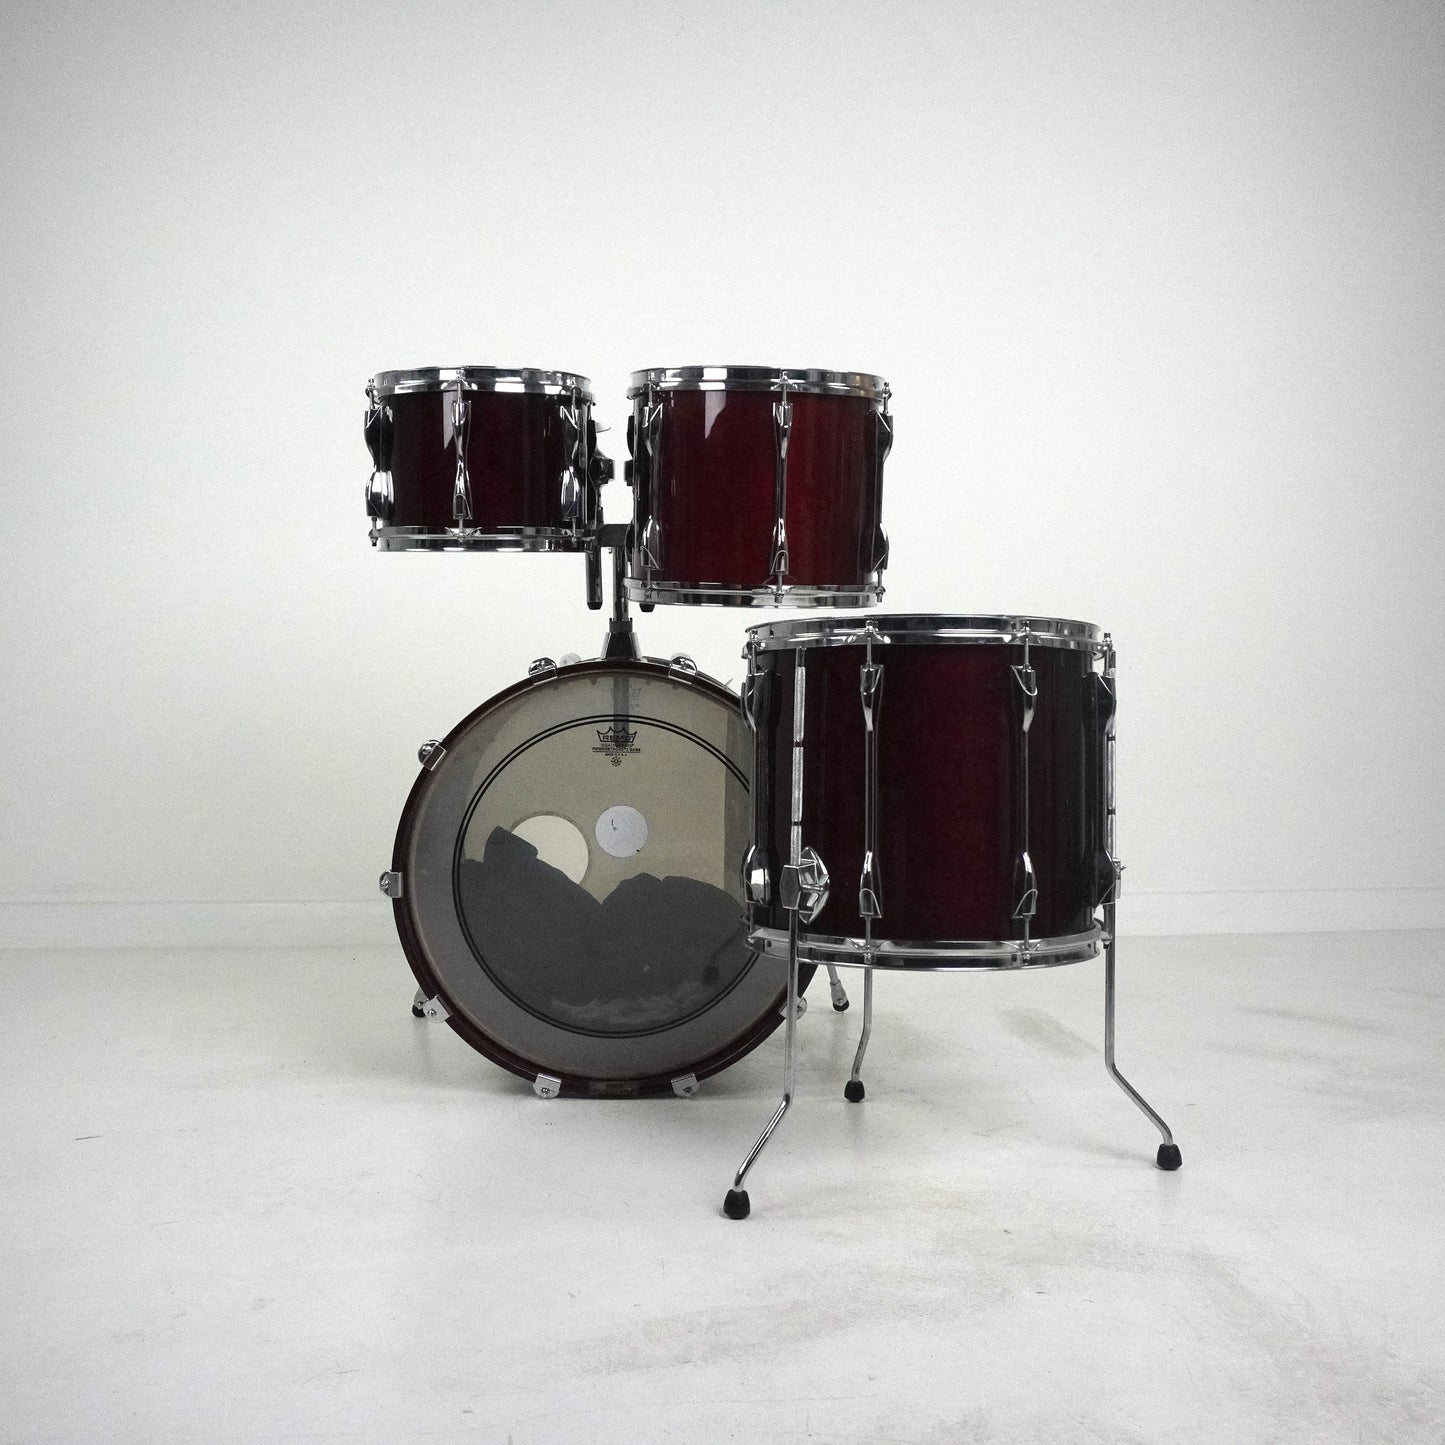 Yamaha Recording Custom 4-Piece Drum Kit in Cherry Finish